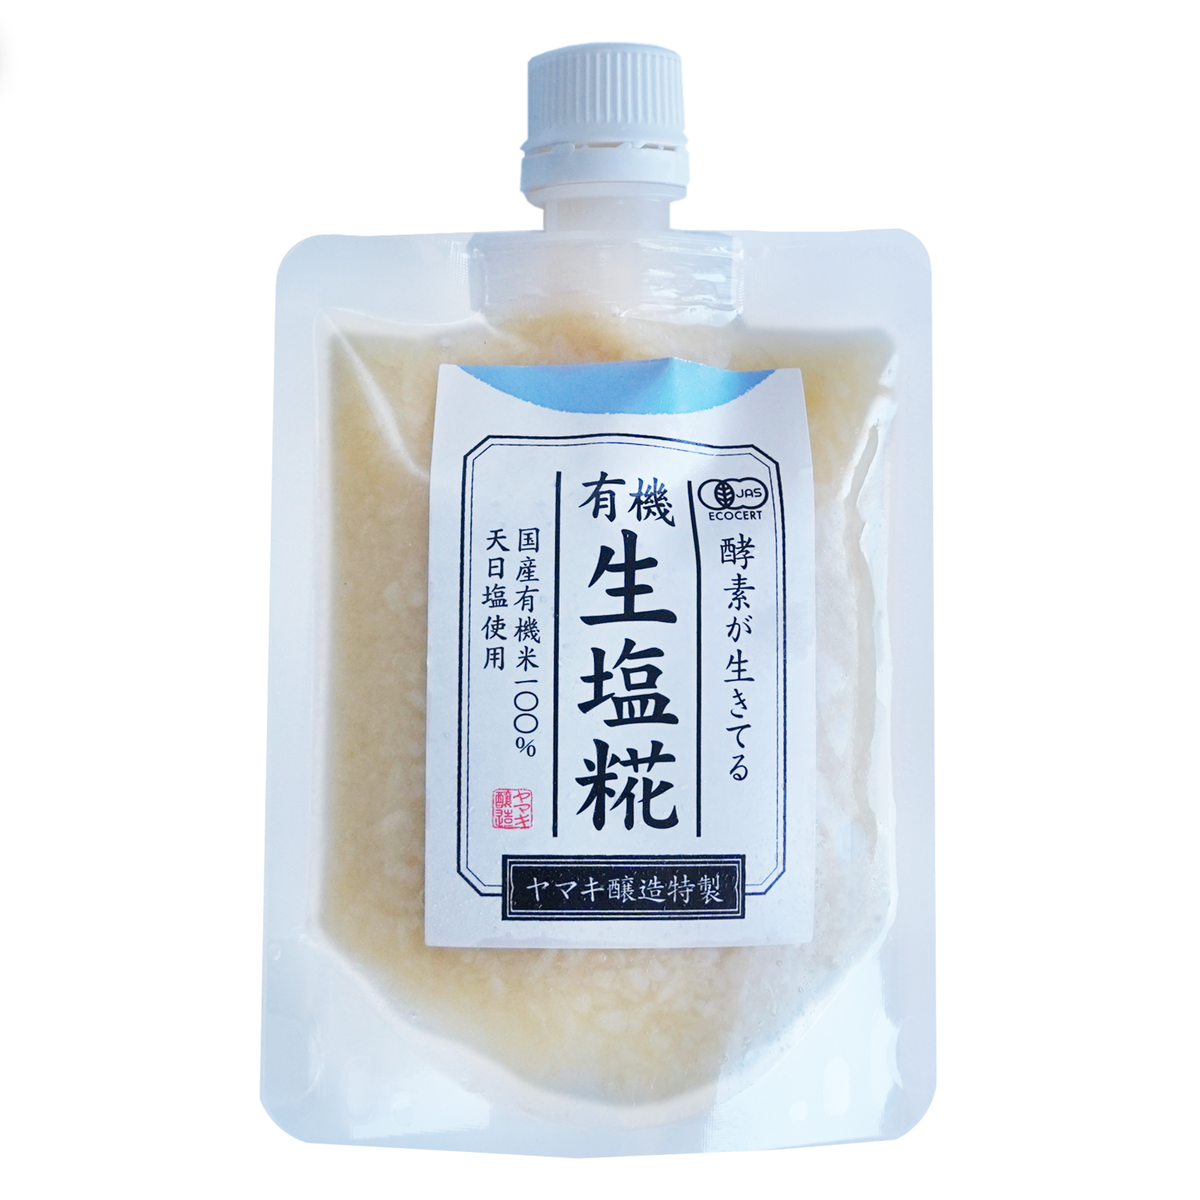 Certified Organic Raw Salted Rice Malt from Japan (170g) - Horizon Farms